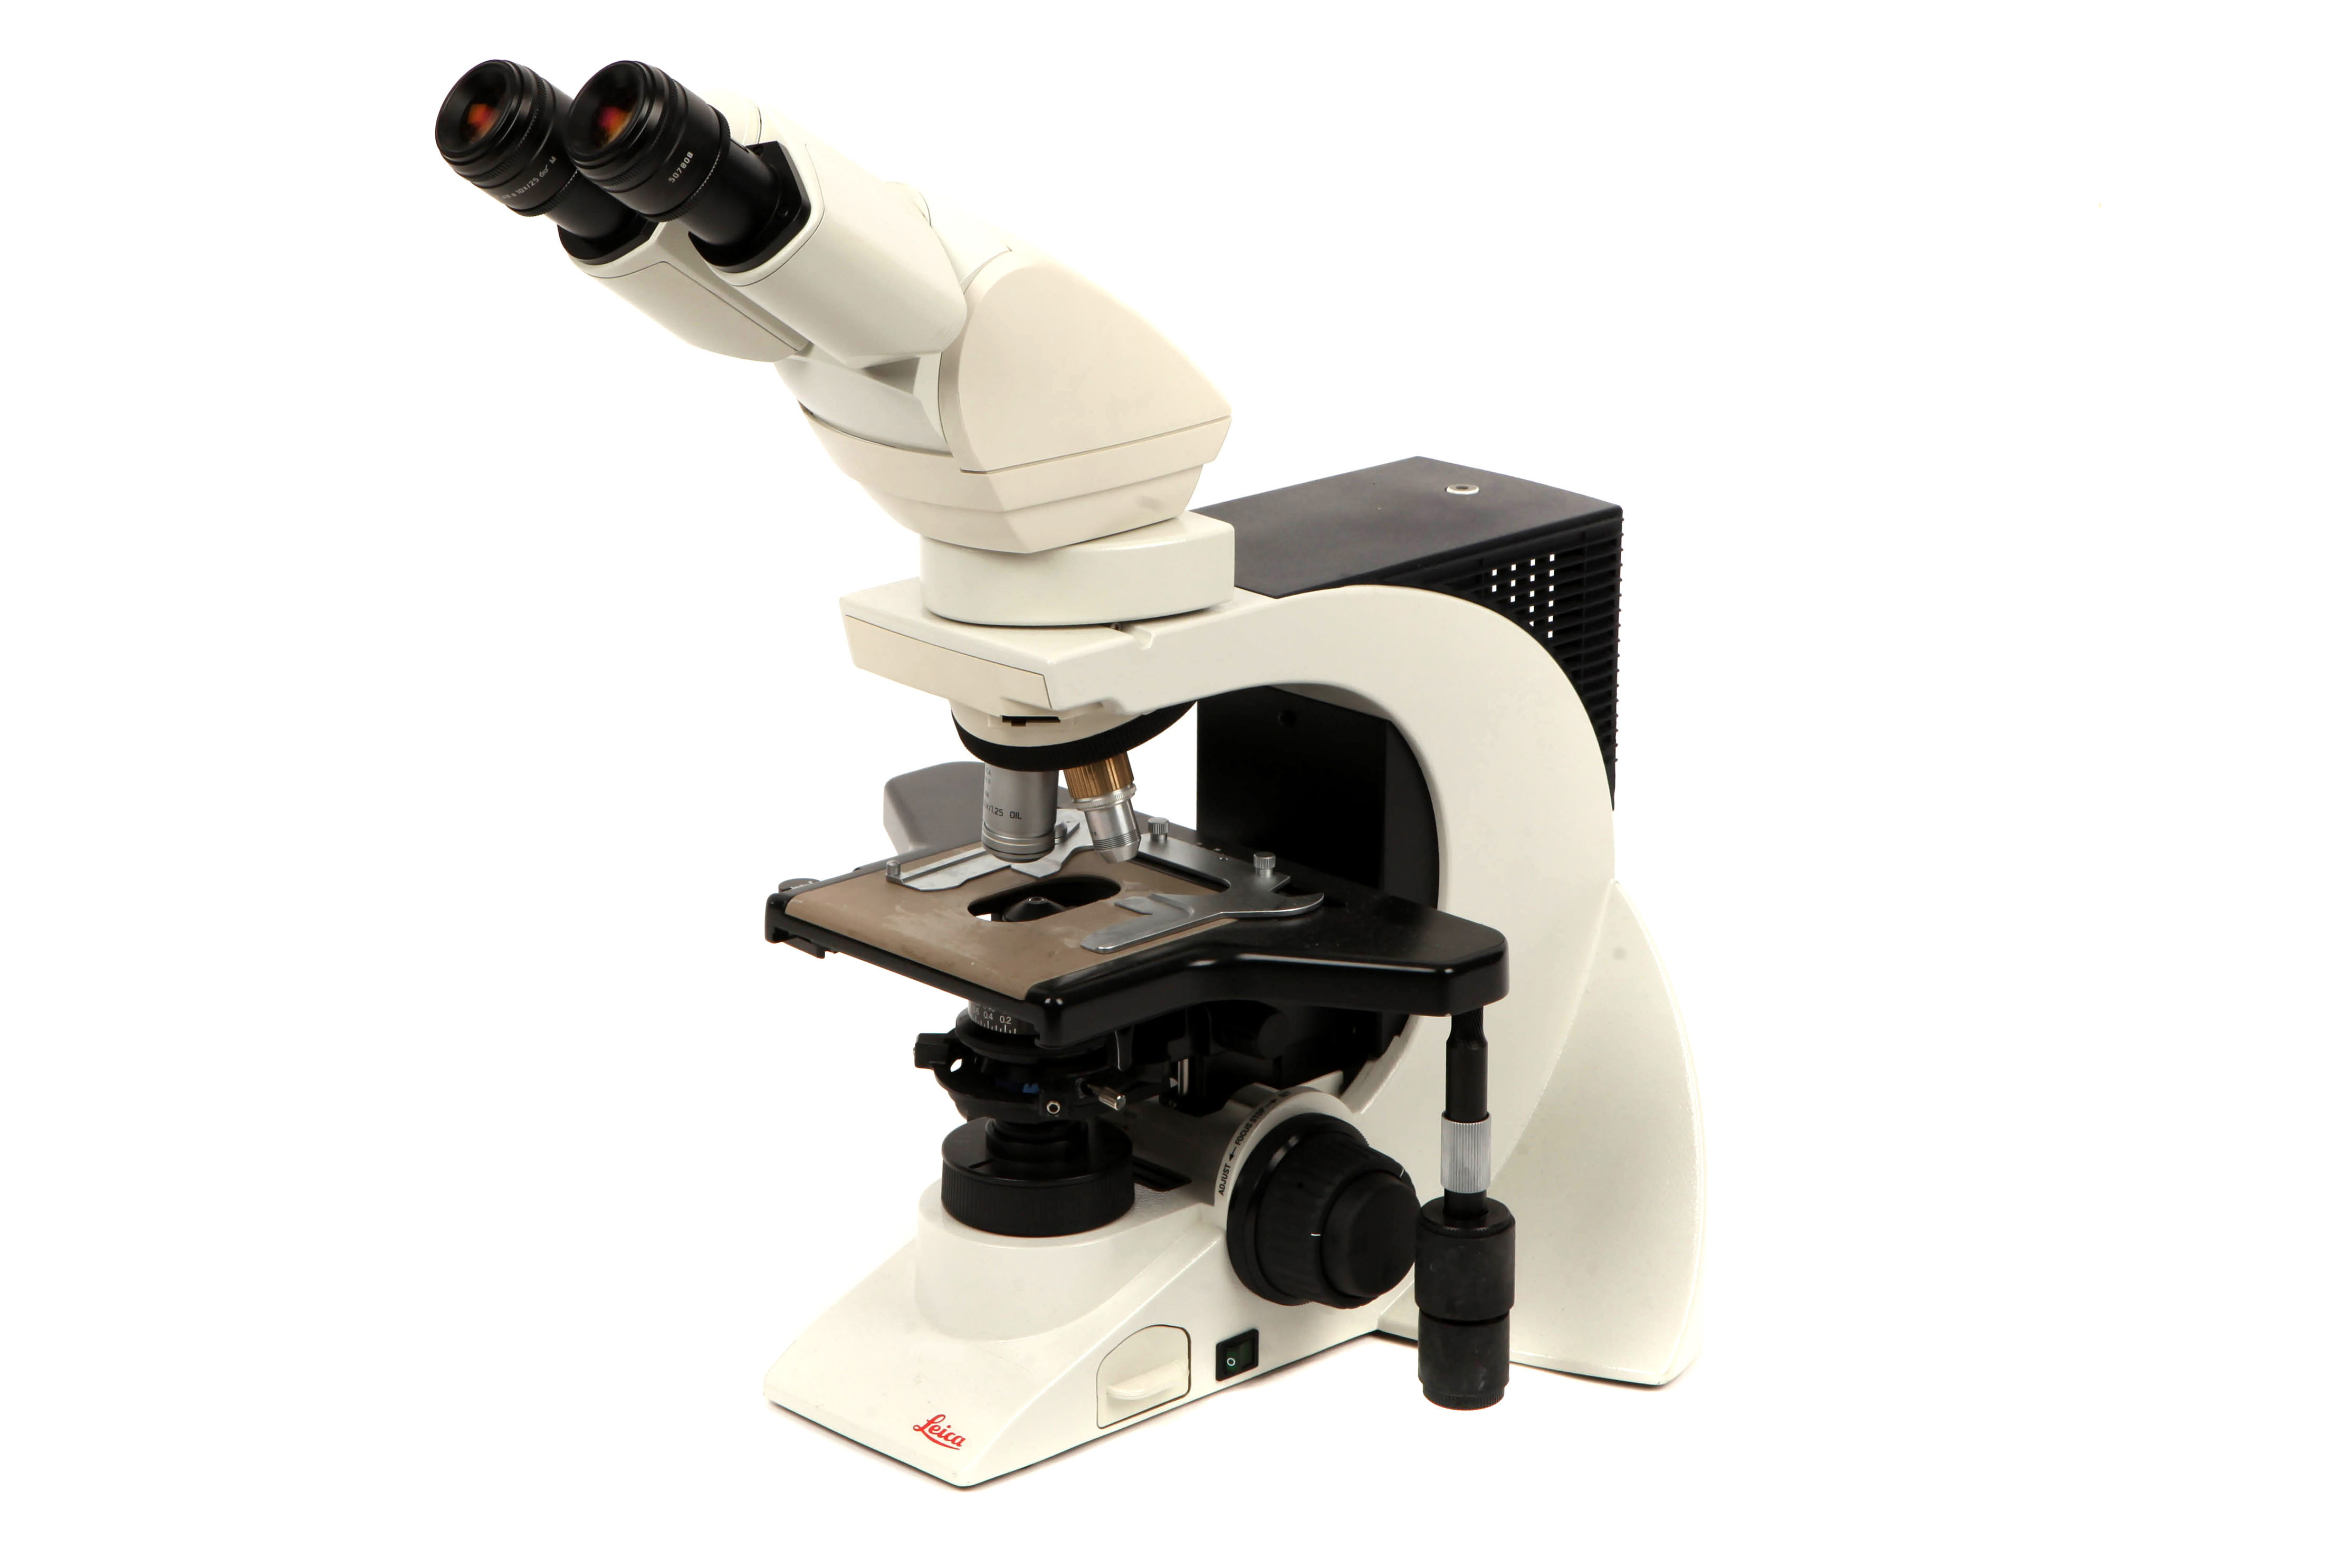 A Modern Leica DM2000 Microscope,